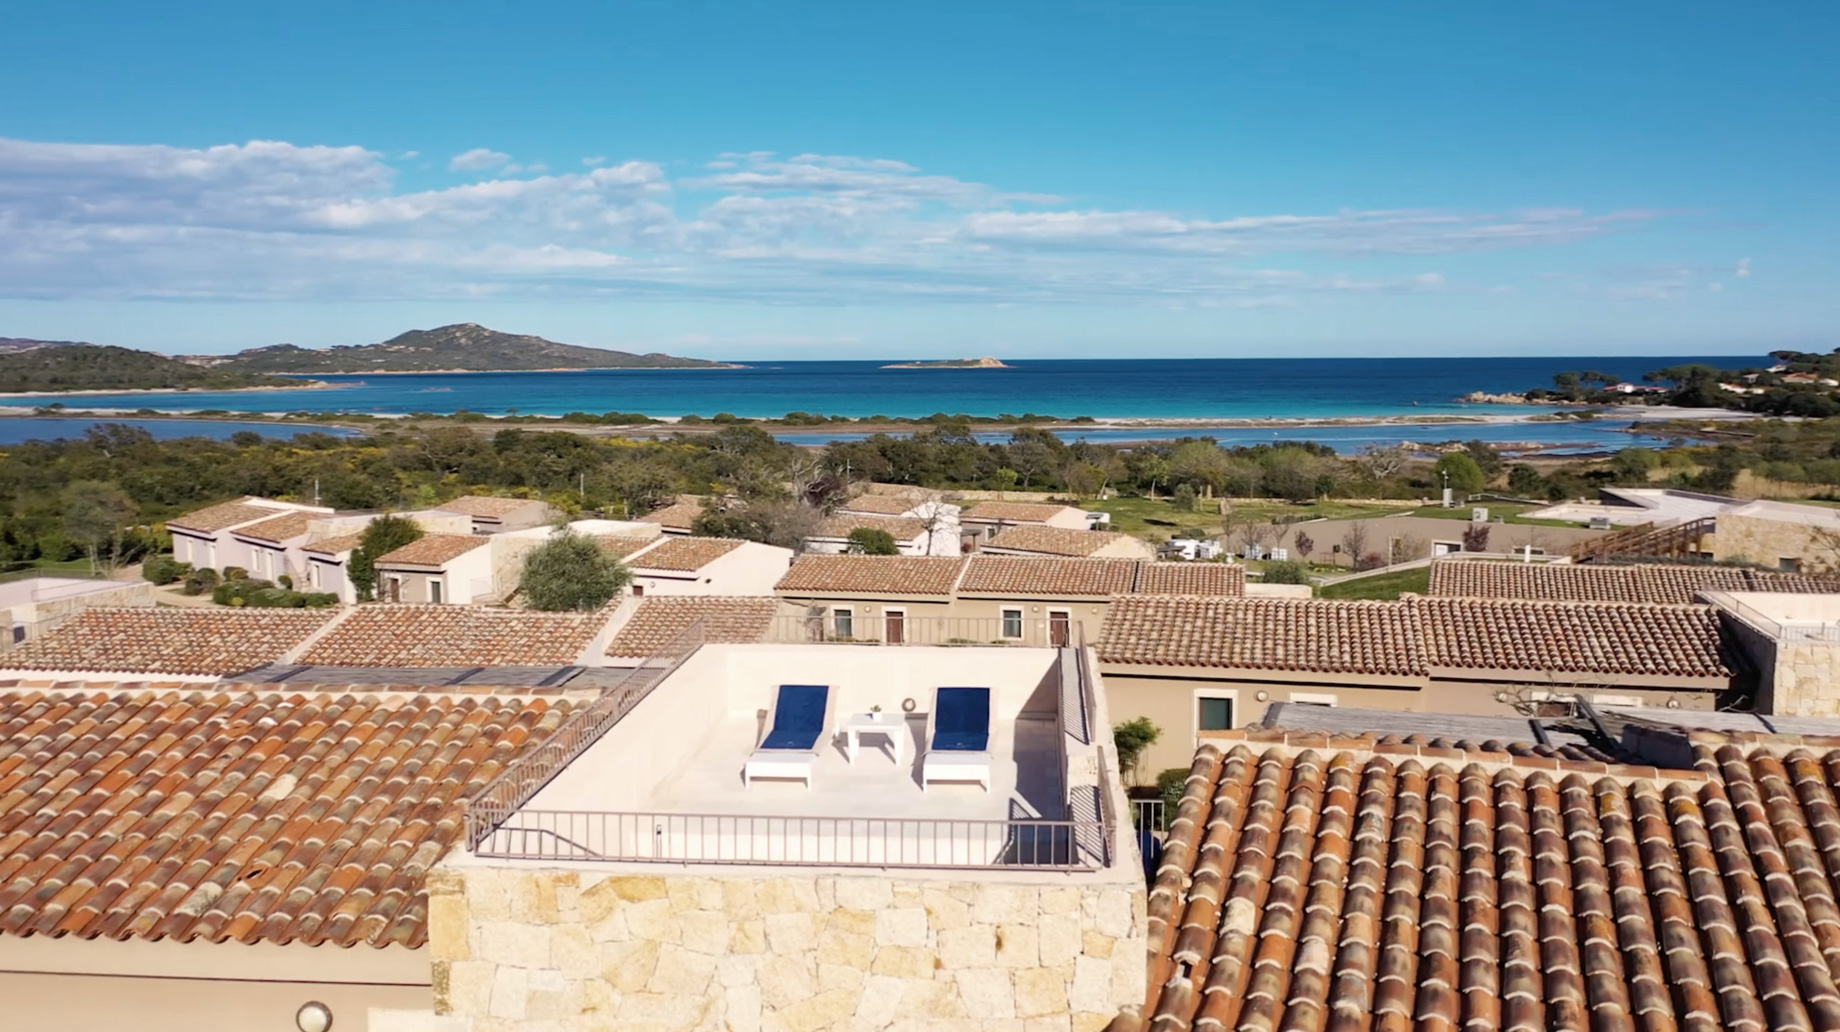 Baglioni Resort Sardinia – San Teodoro, Sardegna, Italy – Rooftop Deck Sea View